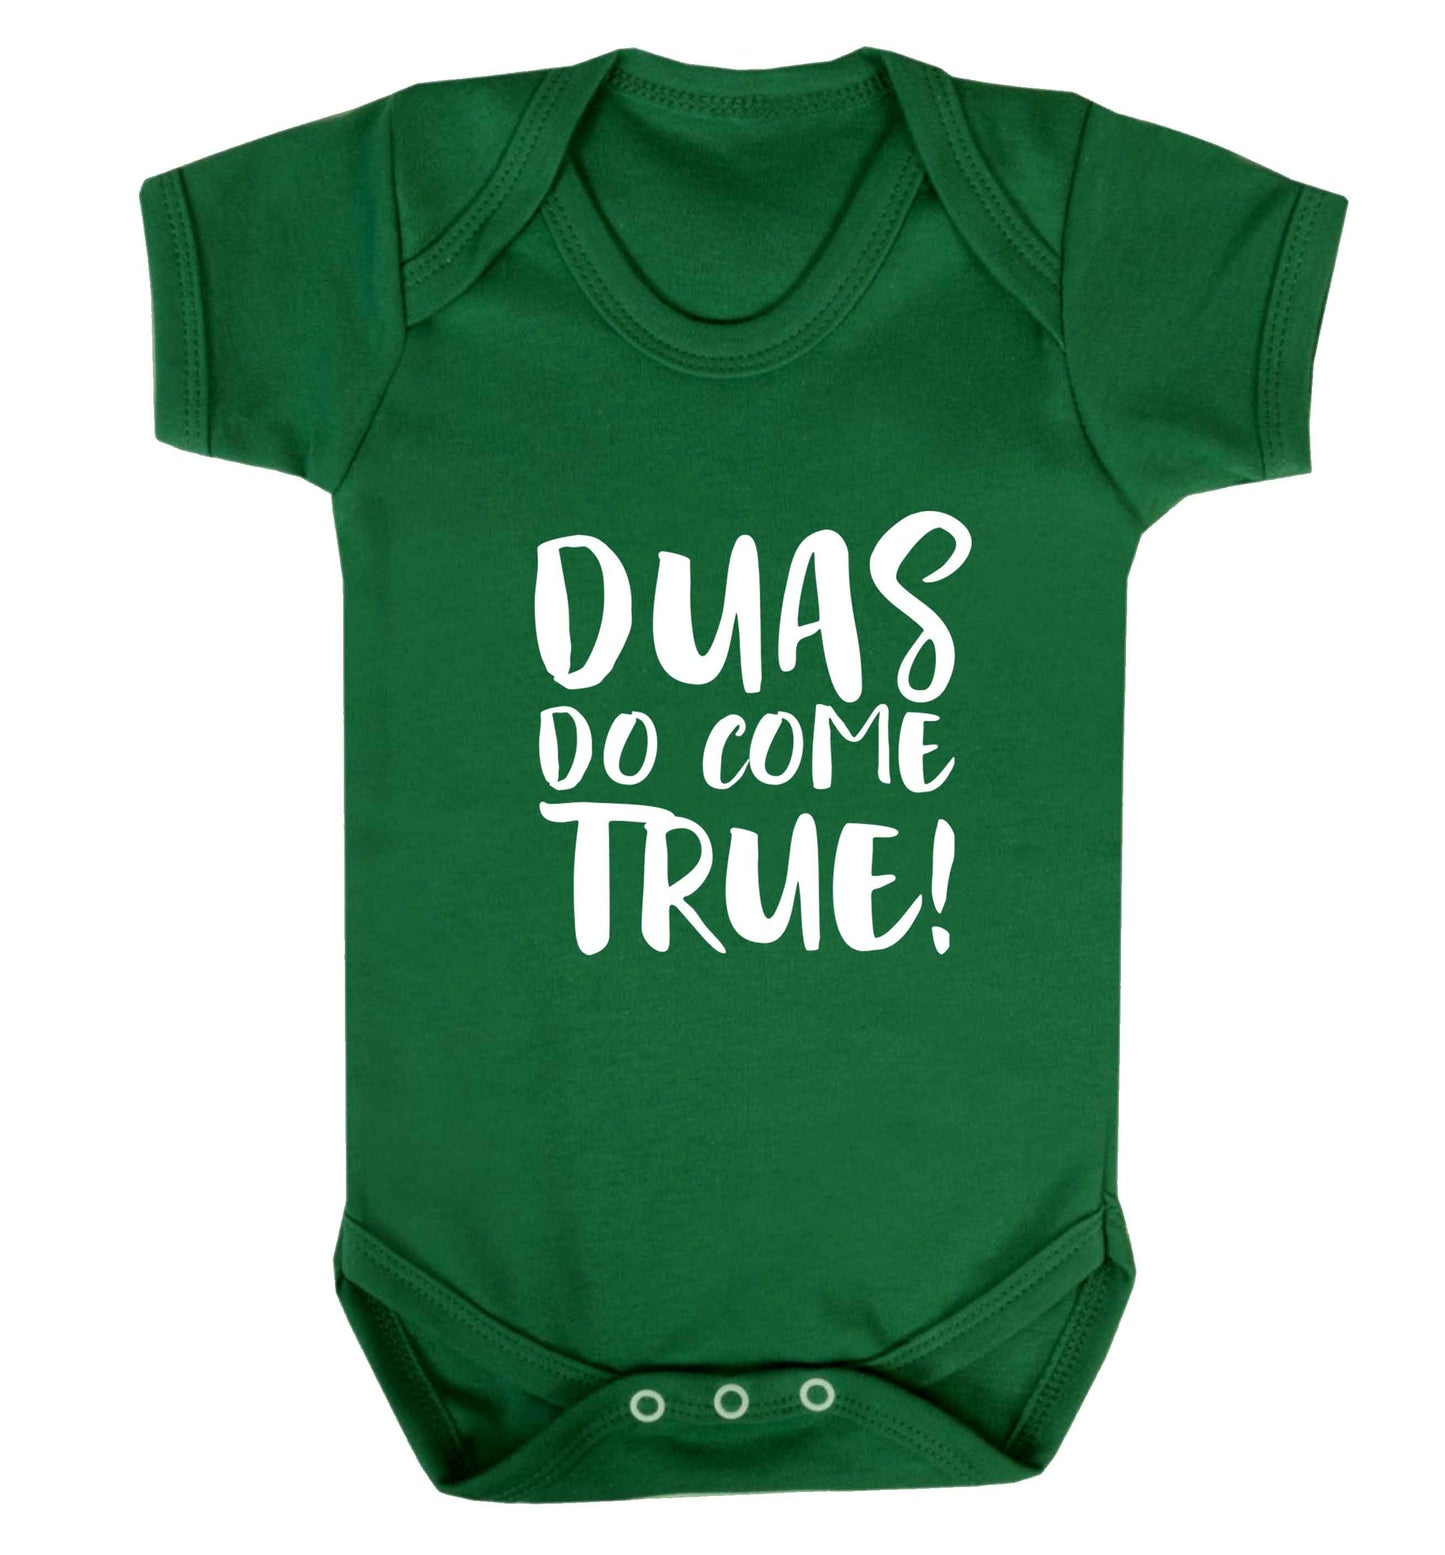 Duas do come true baby vest green 18-24 months